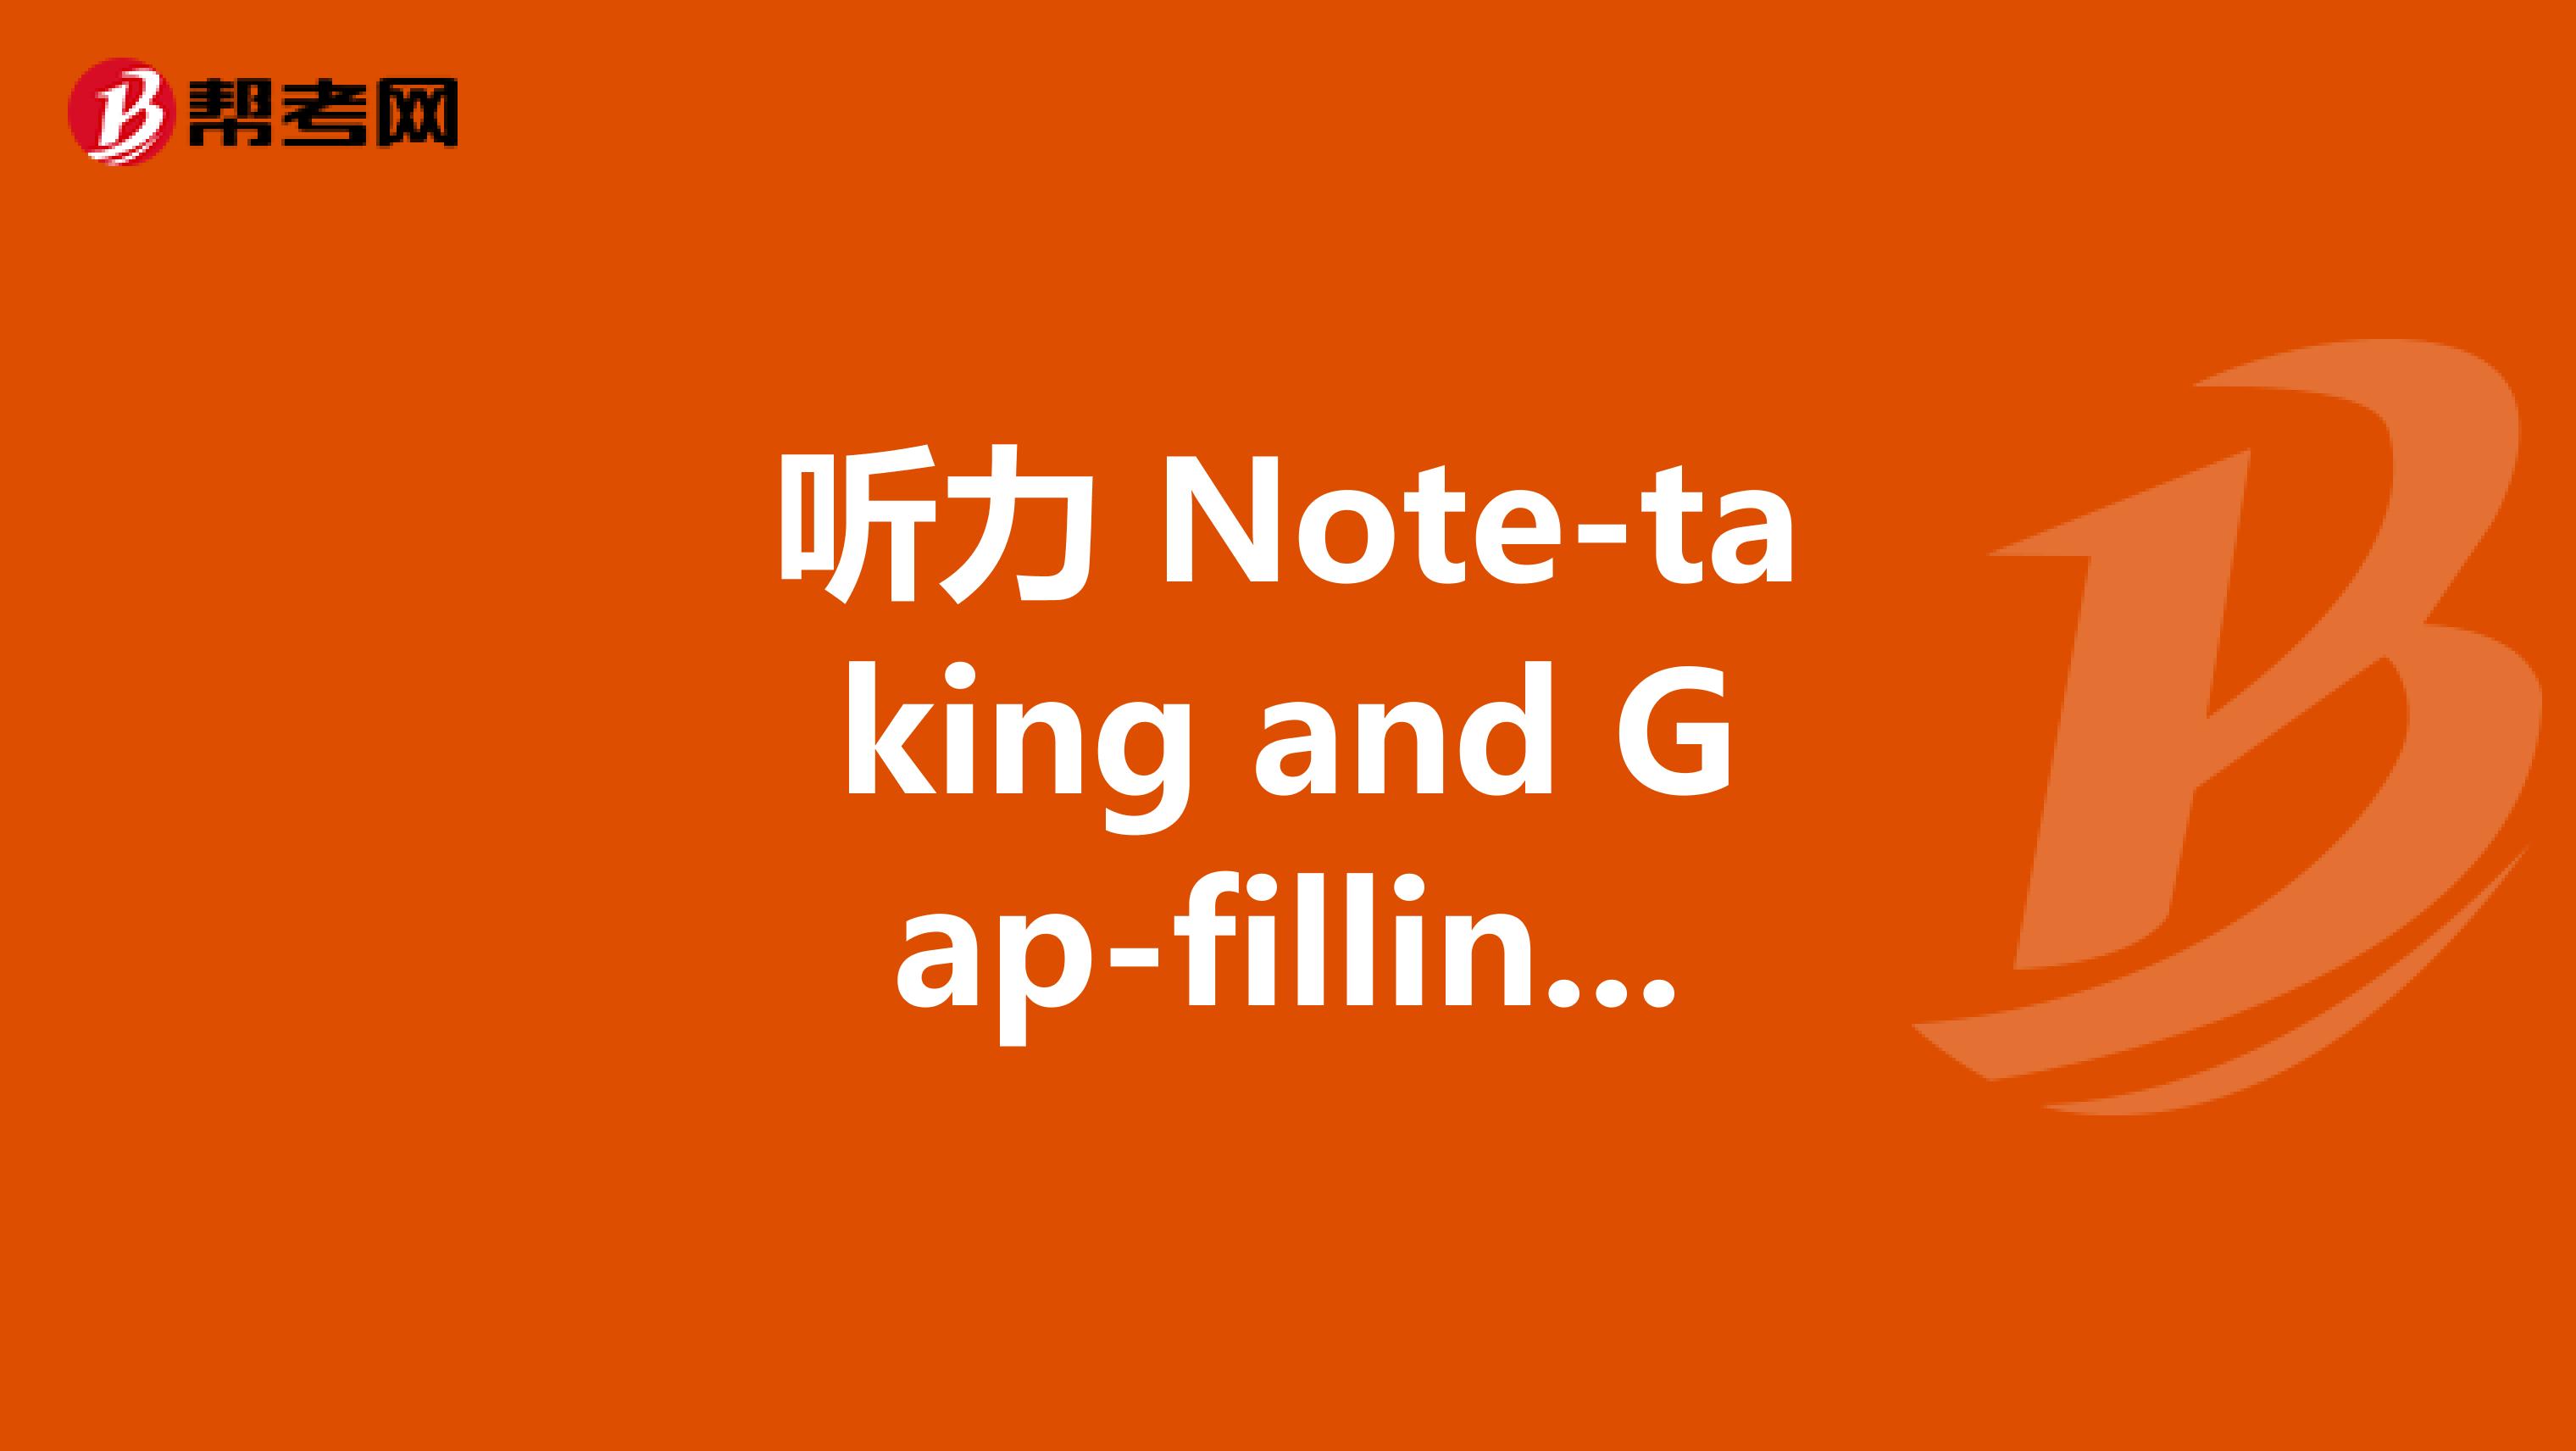 听力 Note-taking and Gap-filling 原文——高级口译真题及答案